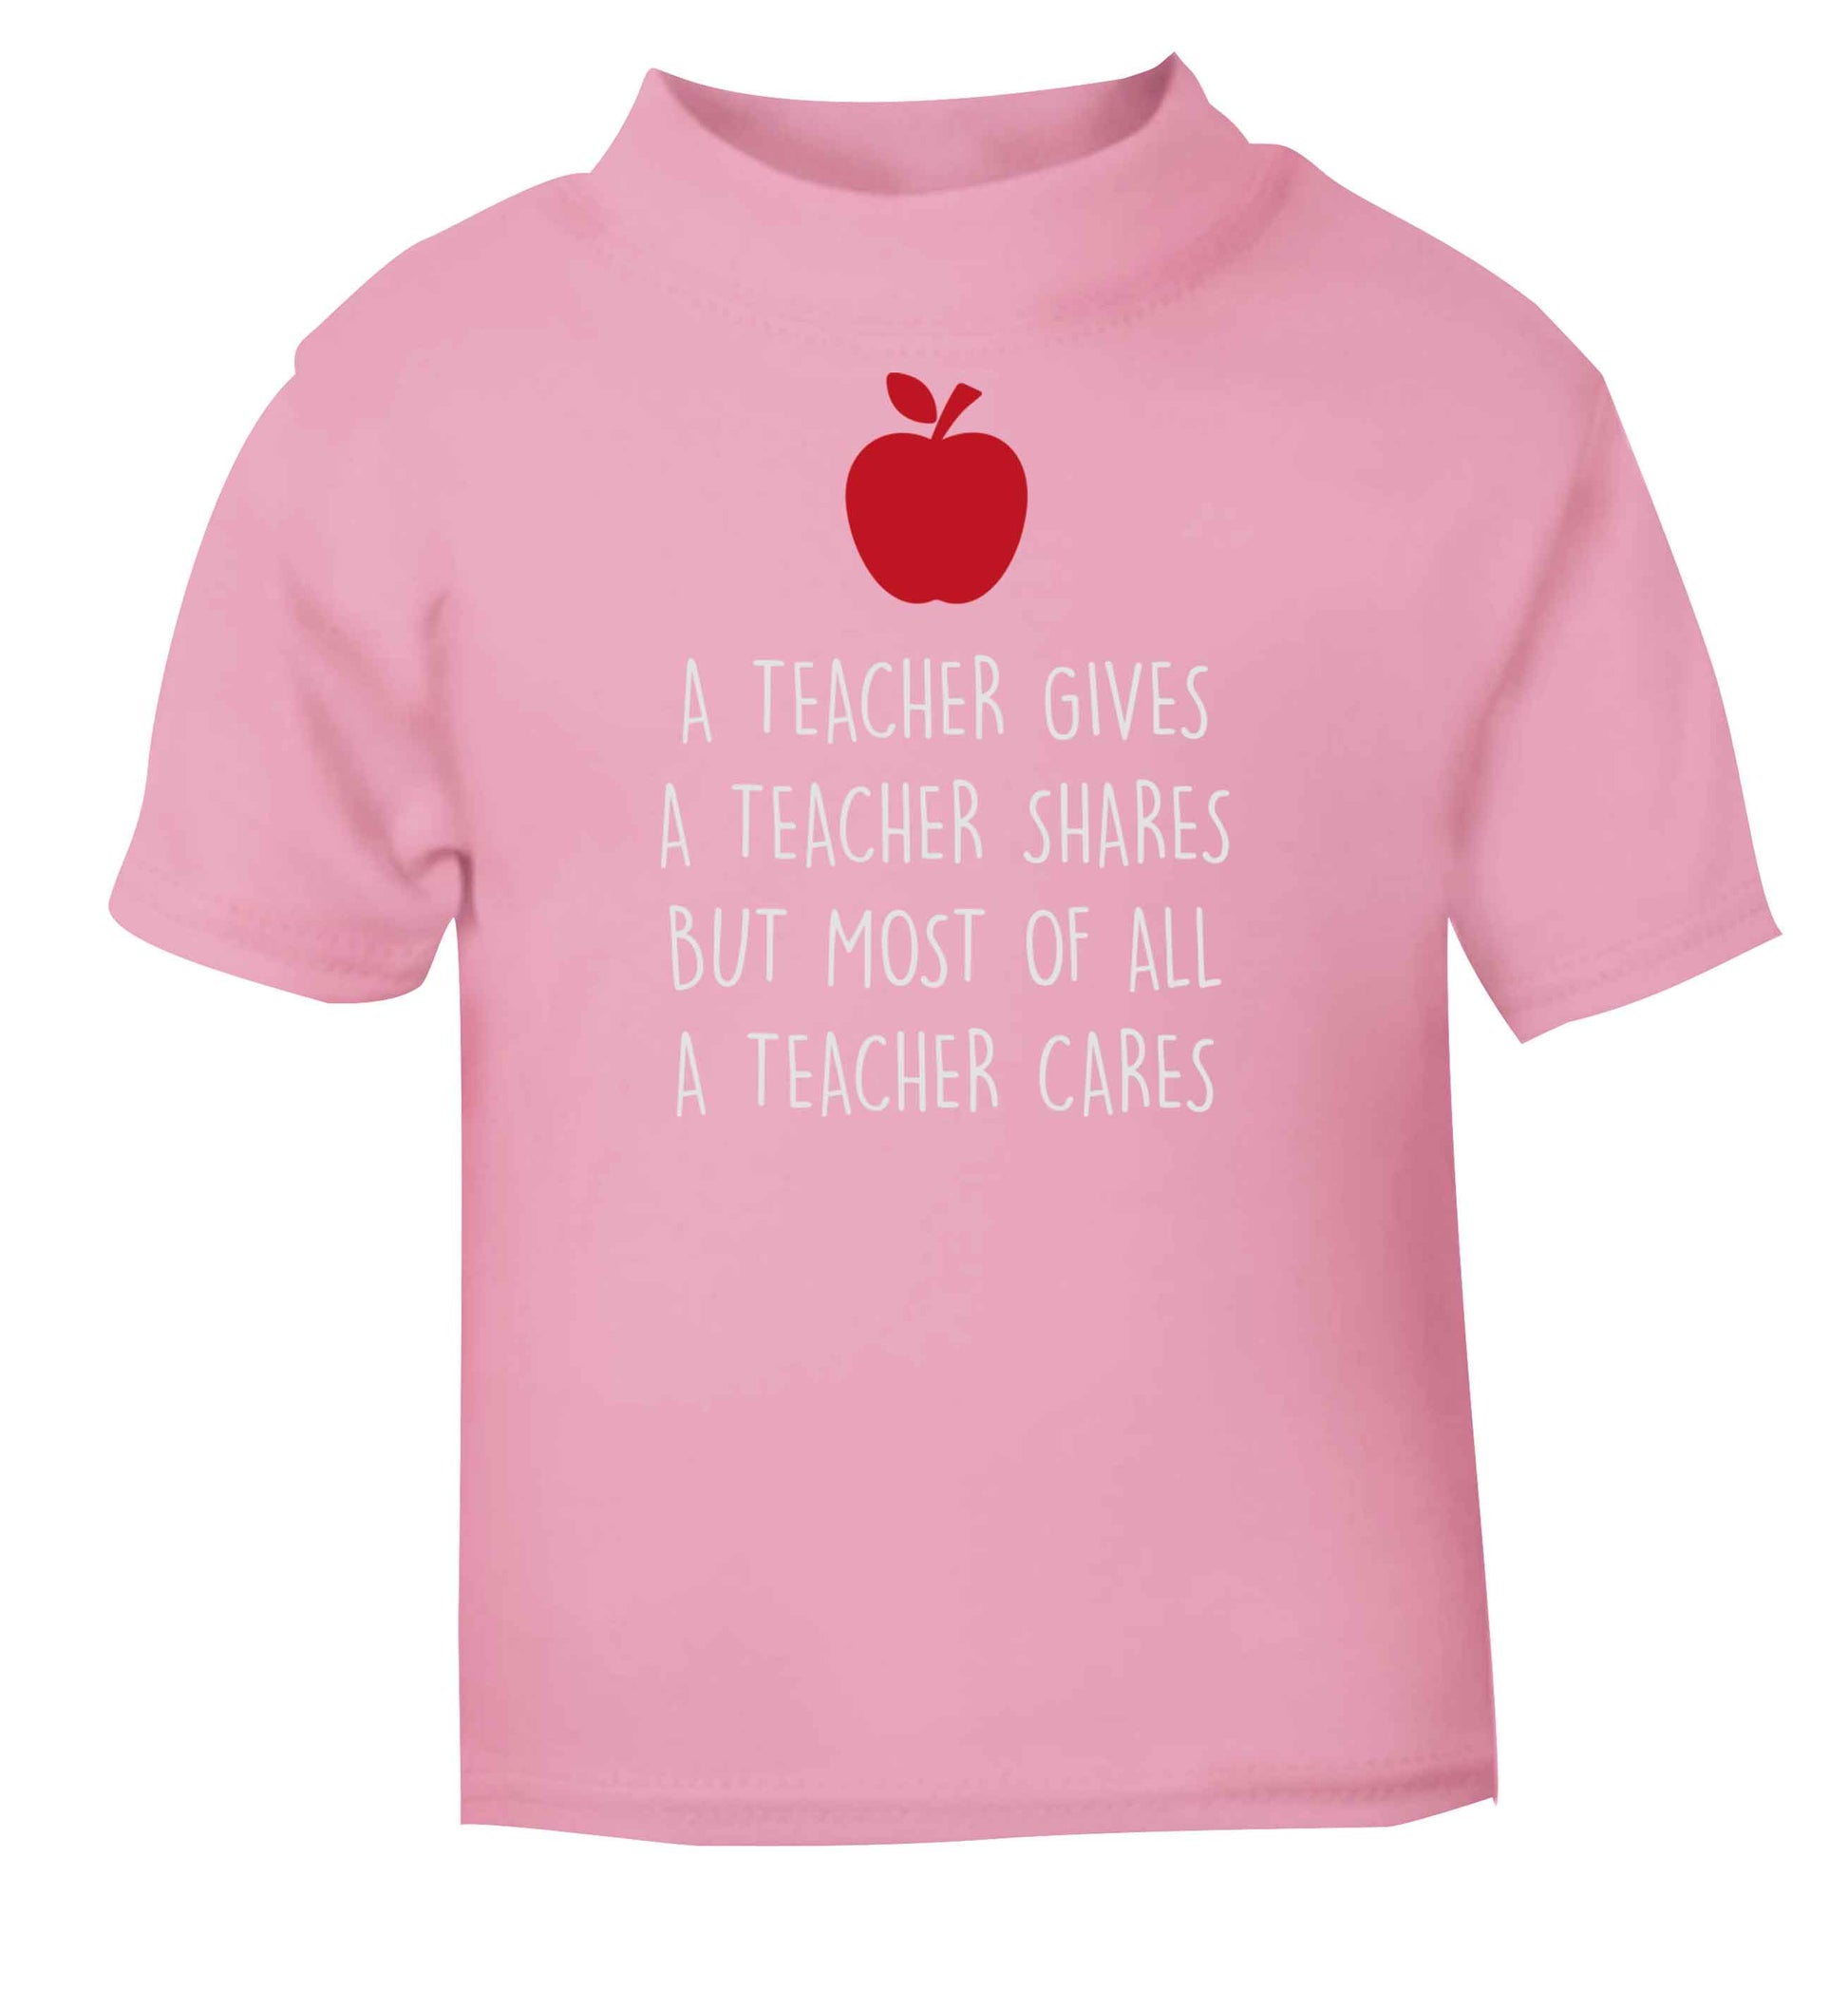 A teacher gives a teacher shares but most of all a teacher cares light pink baby toddler Tshirt 2 Years